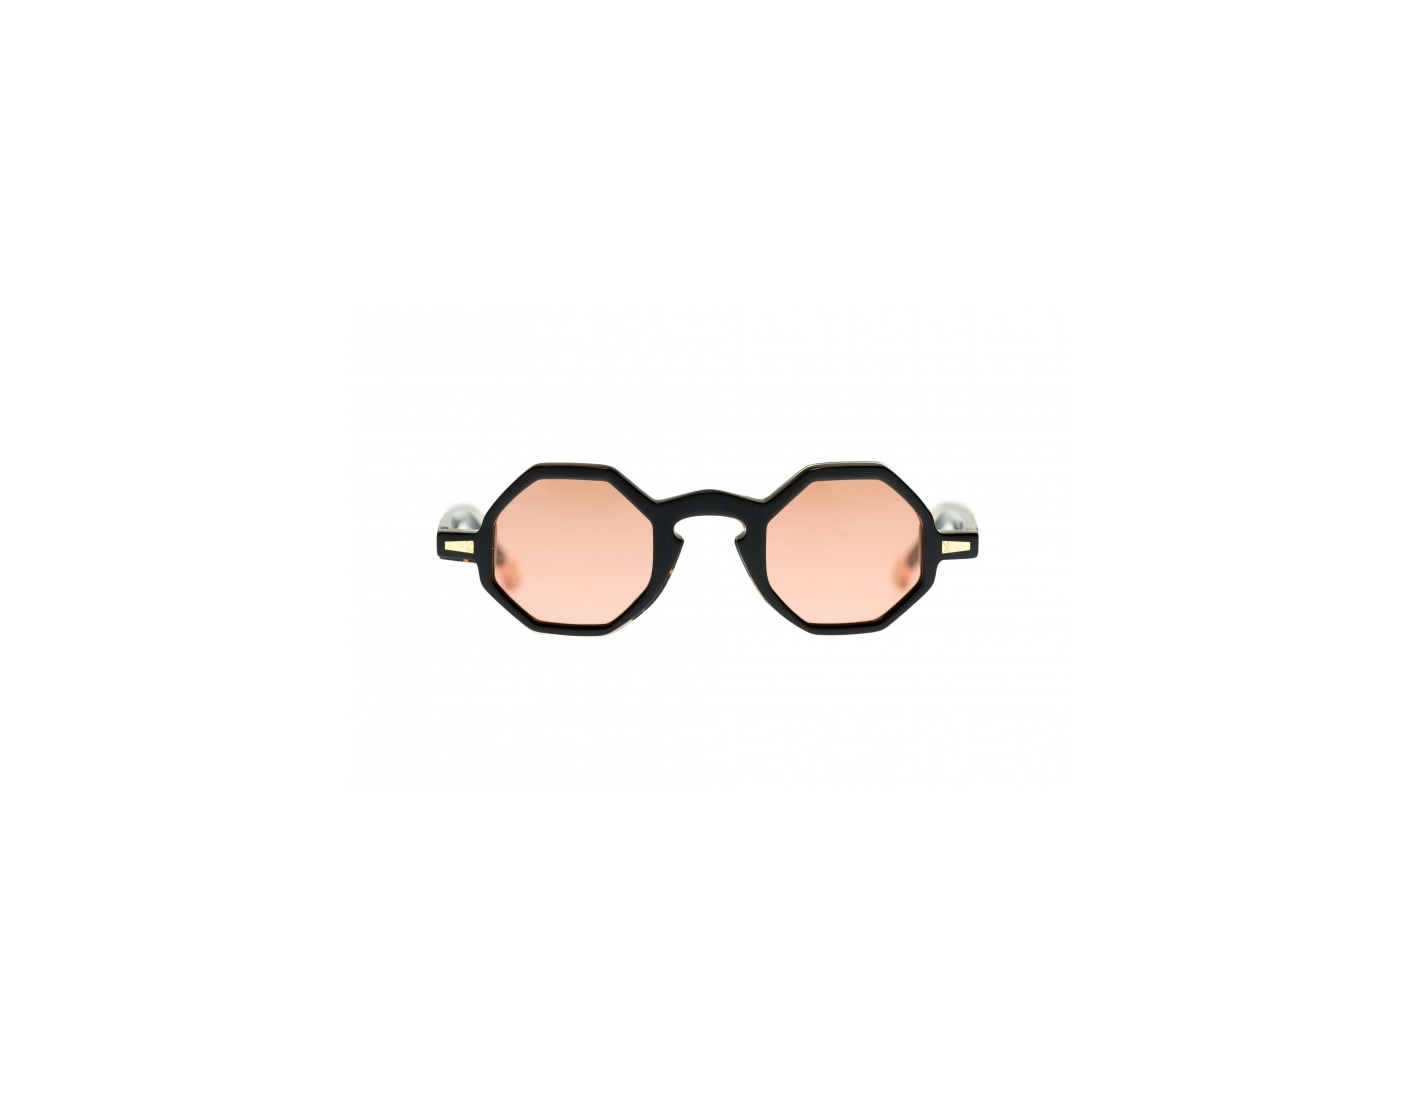 KYME Sunglasses - KYMINI // Otto Choose the best shape for you